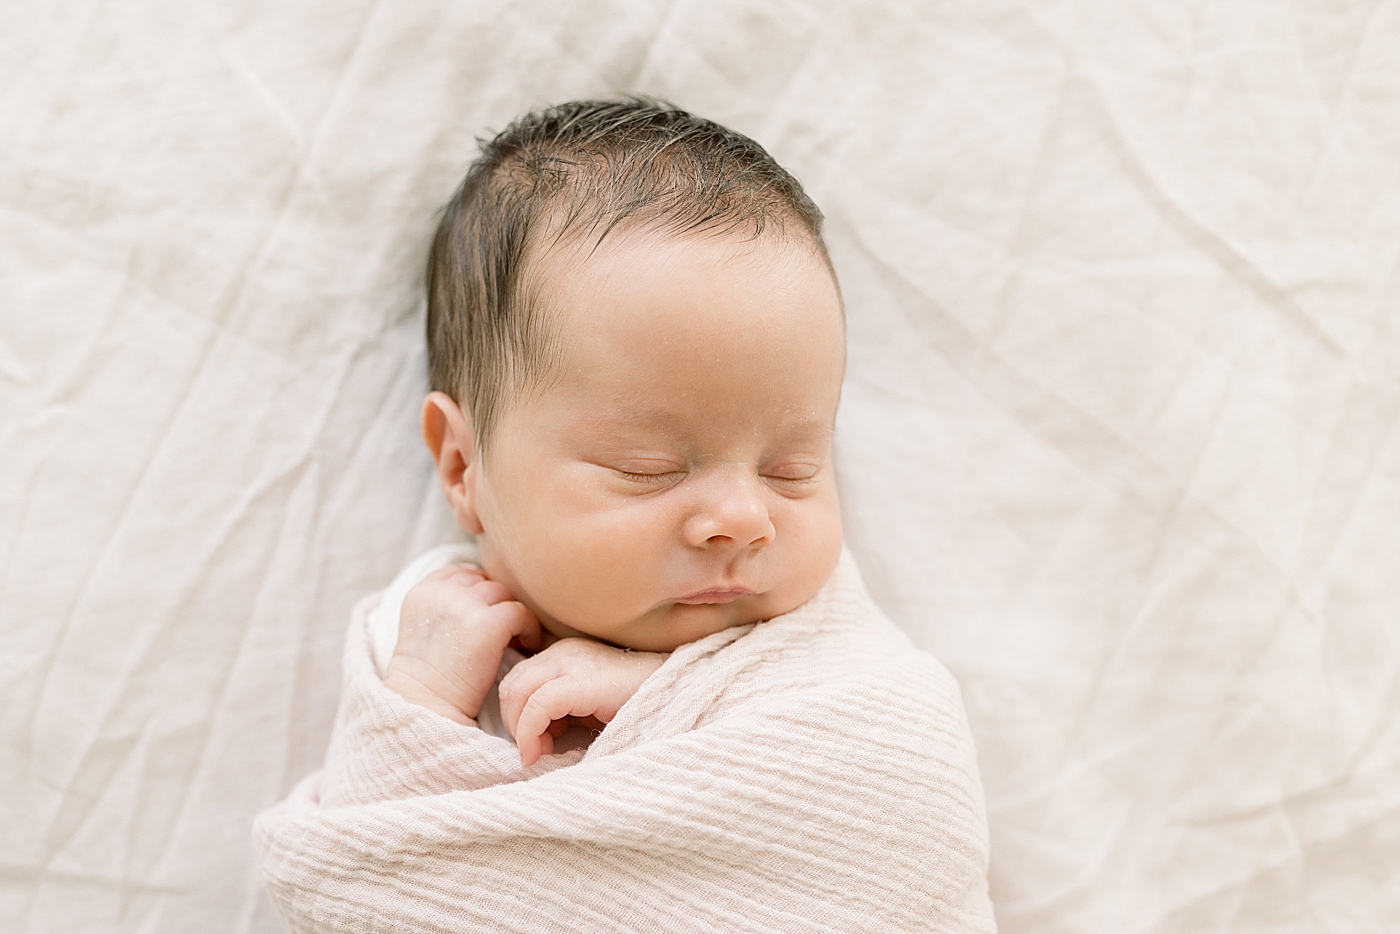 Sleeping newborn baby girl in a cream blanket | Image by Caitlyn Motycka